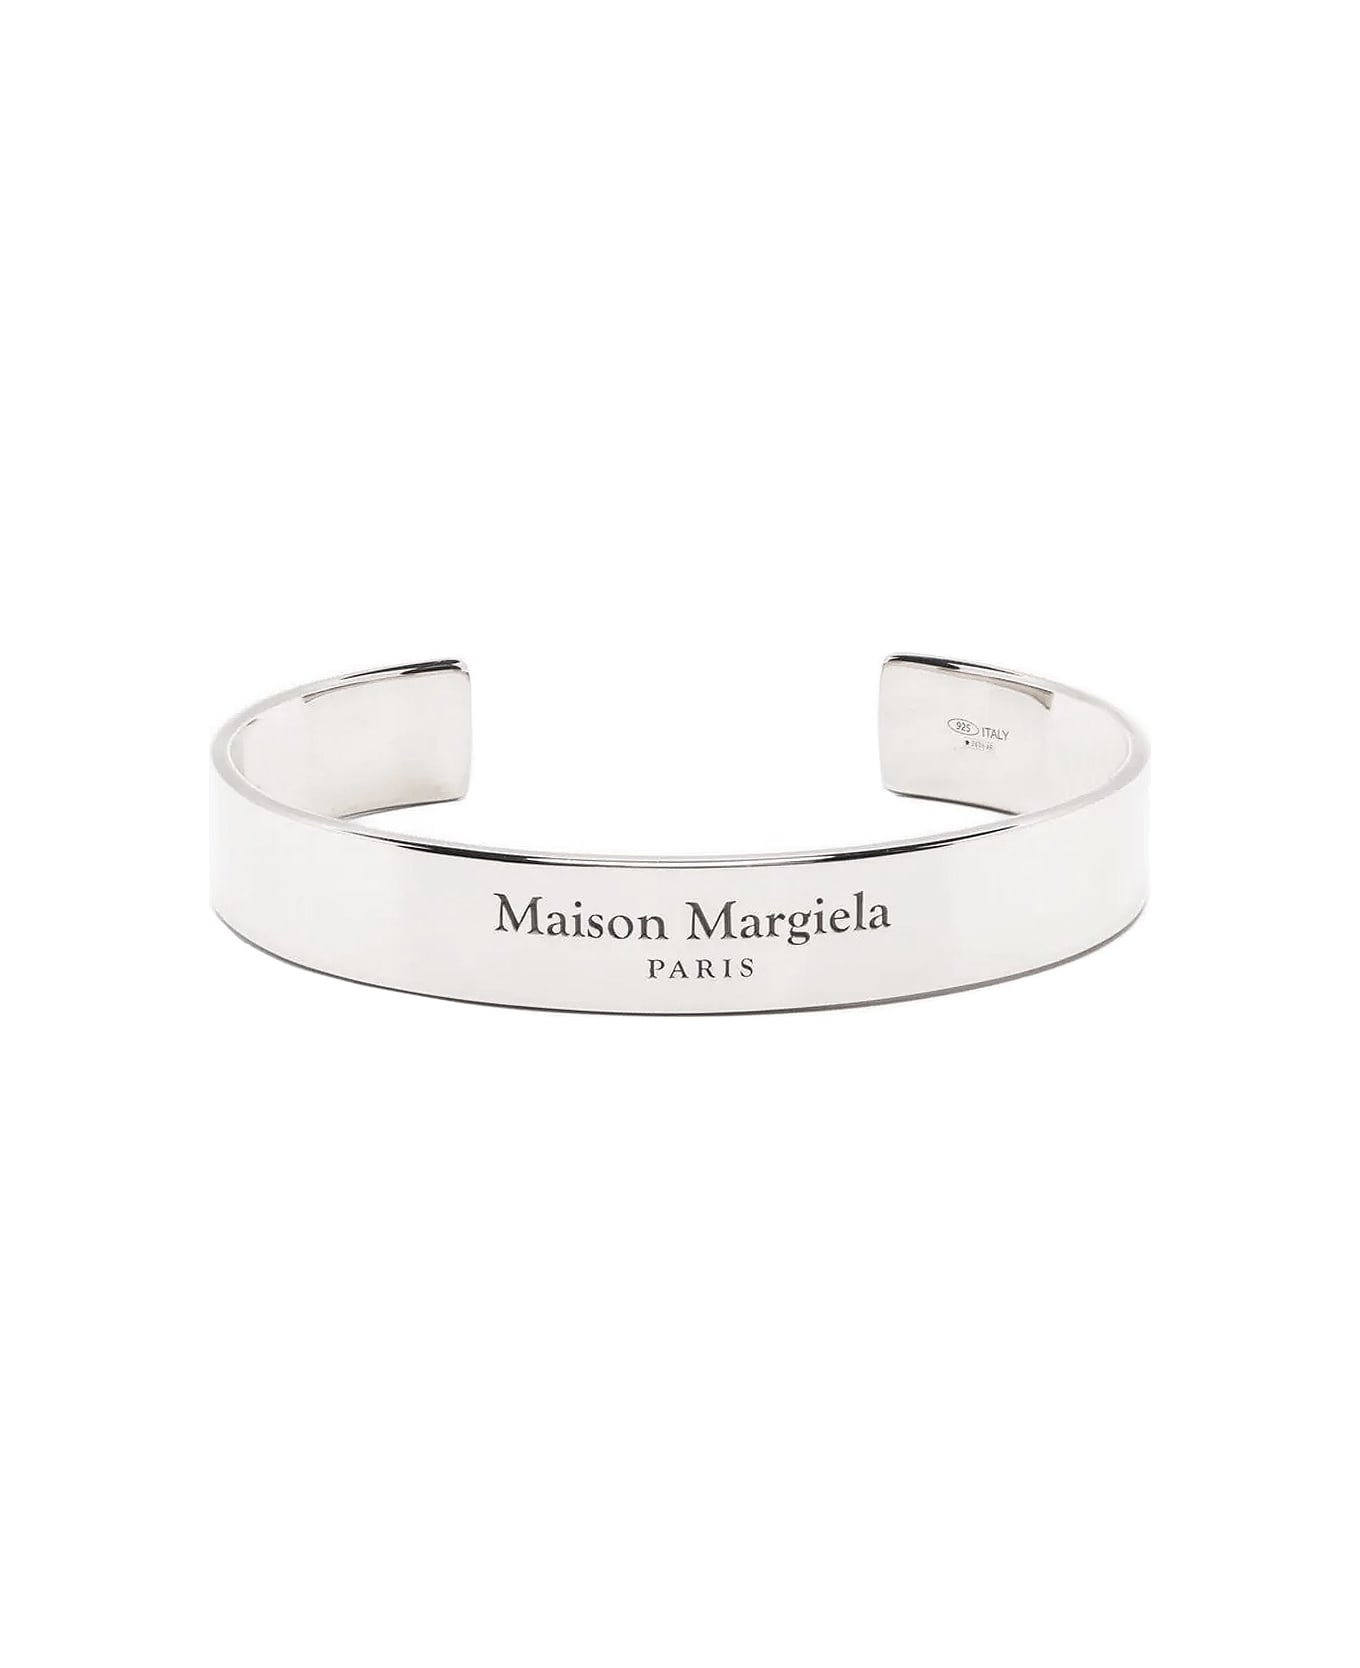 Maison Margiela Bracelet - Silver